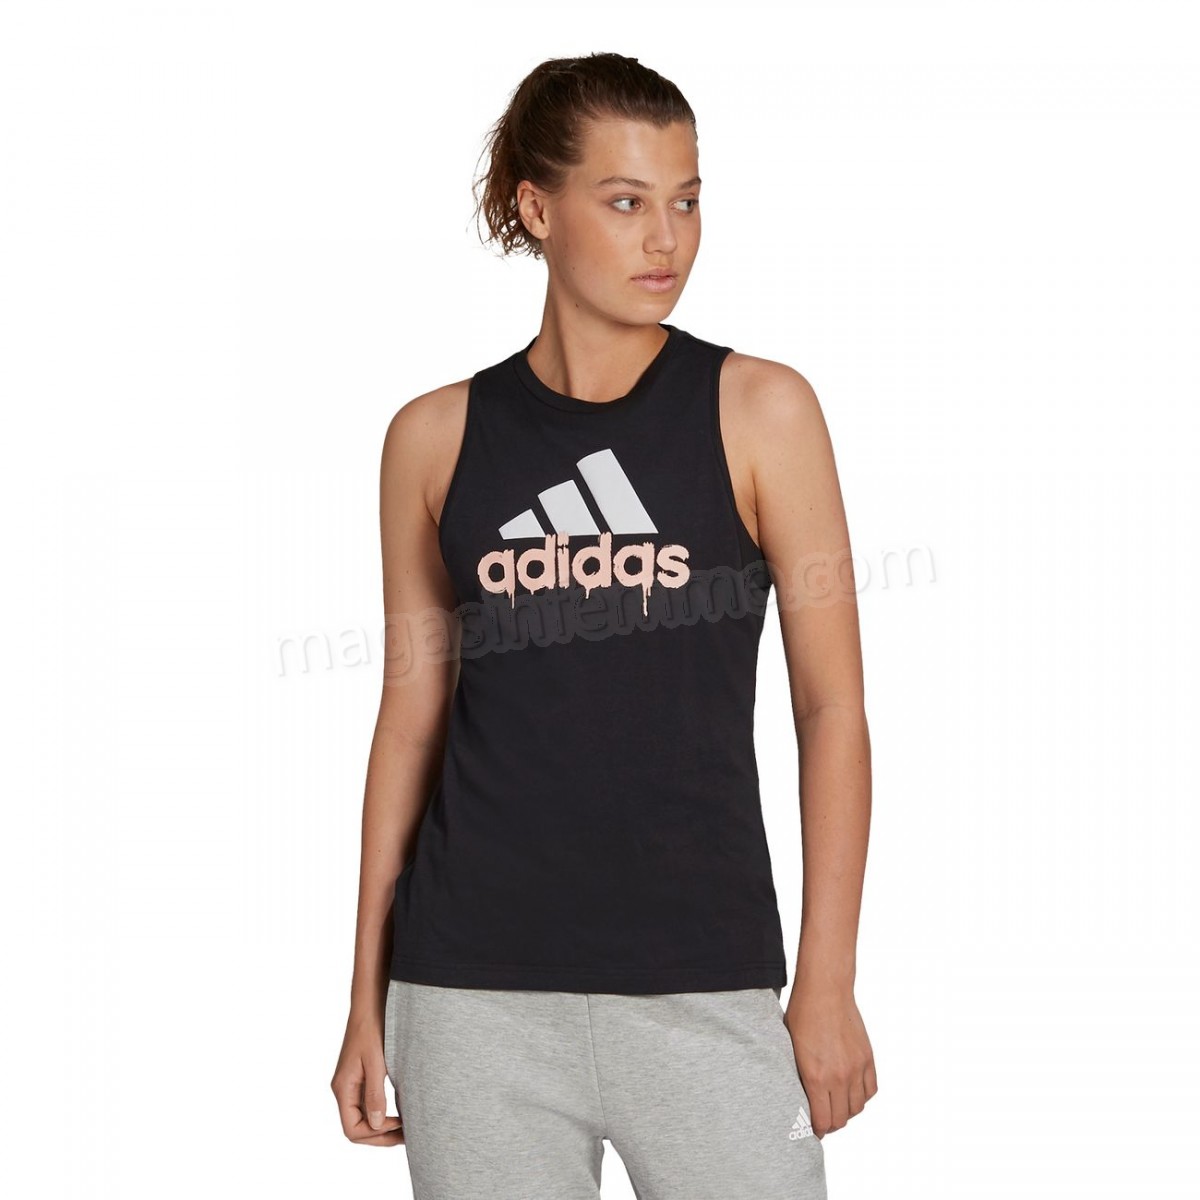 Adidas-Fitness femme ADIDAS Débardeur femme adidas Graphic Basic en solde - -4